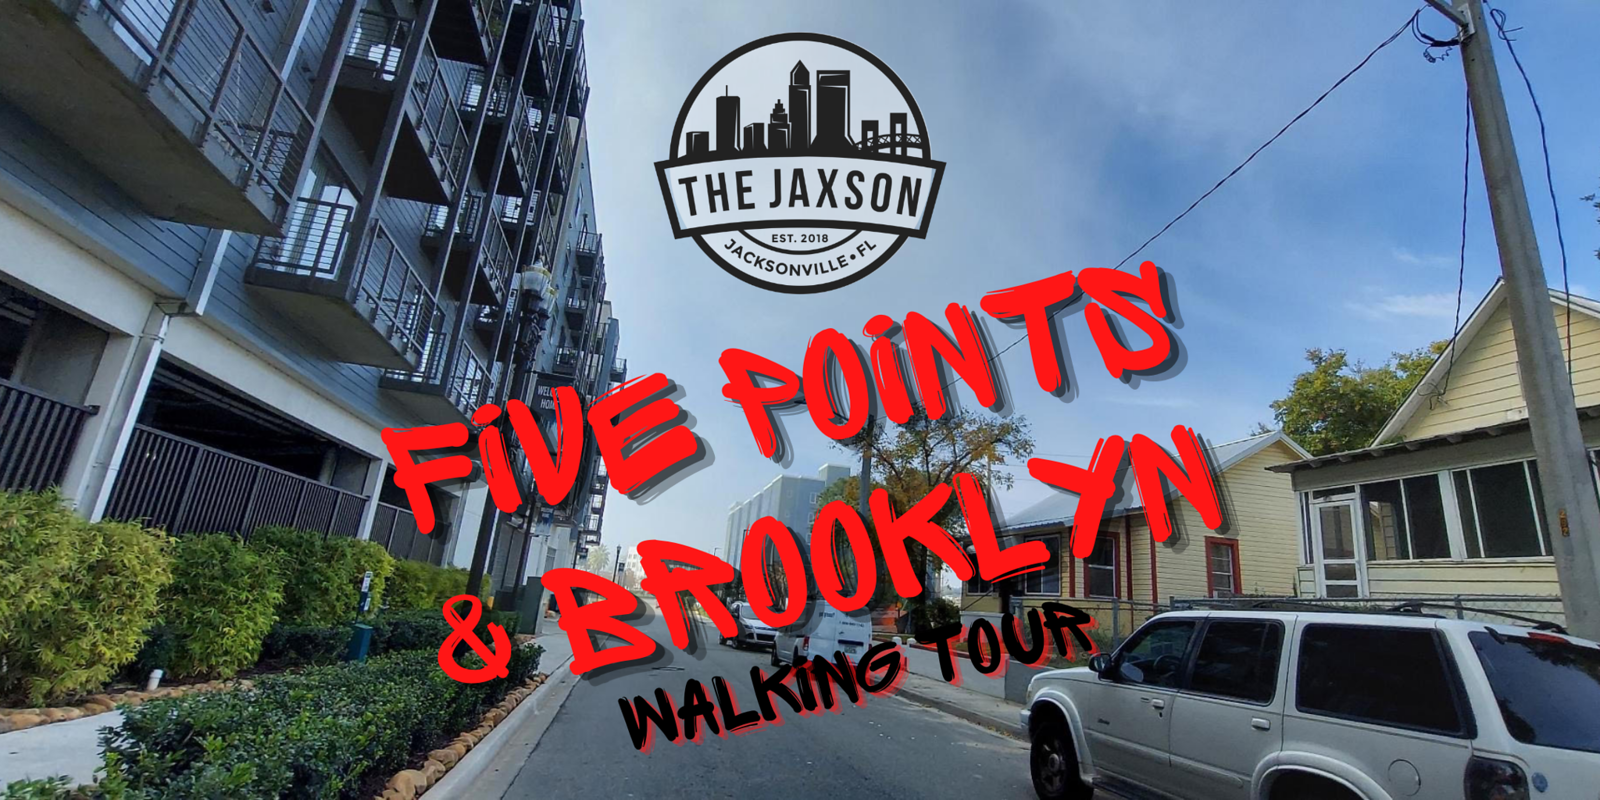 The Jaxson: Five Points & Brooklyn Walking Tour